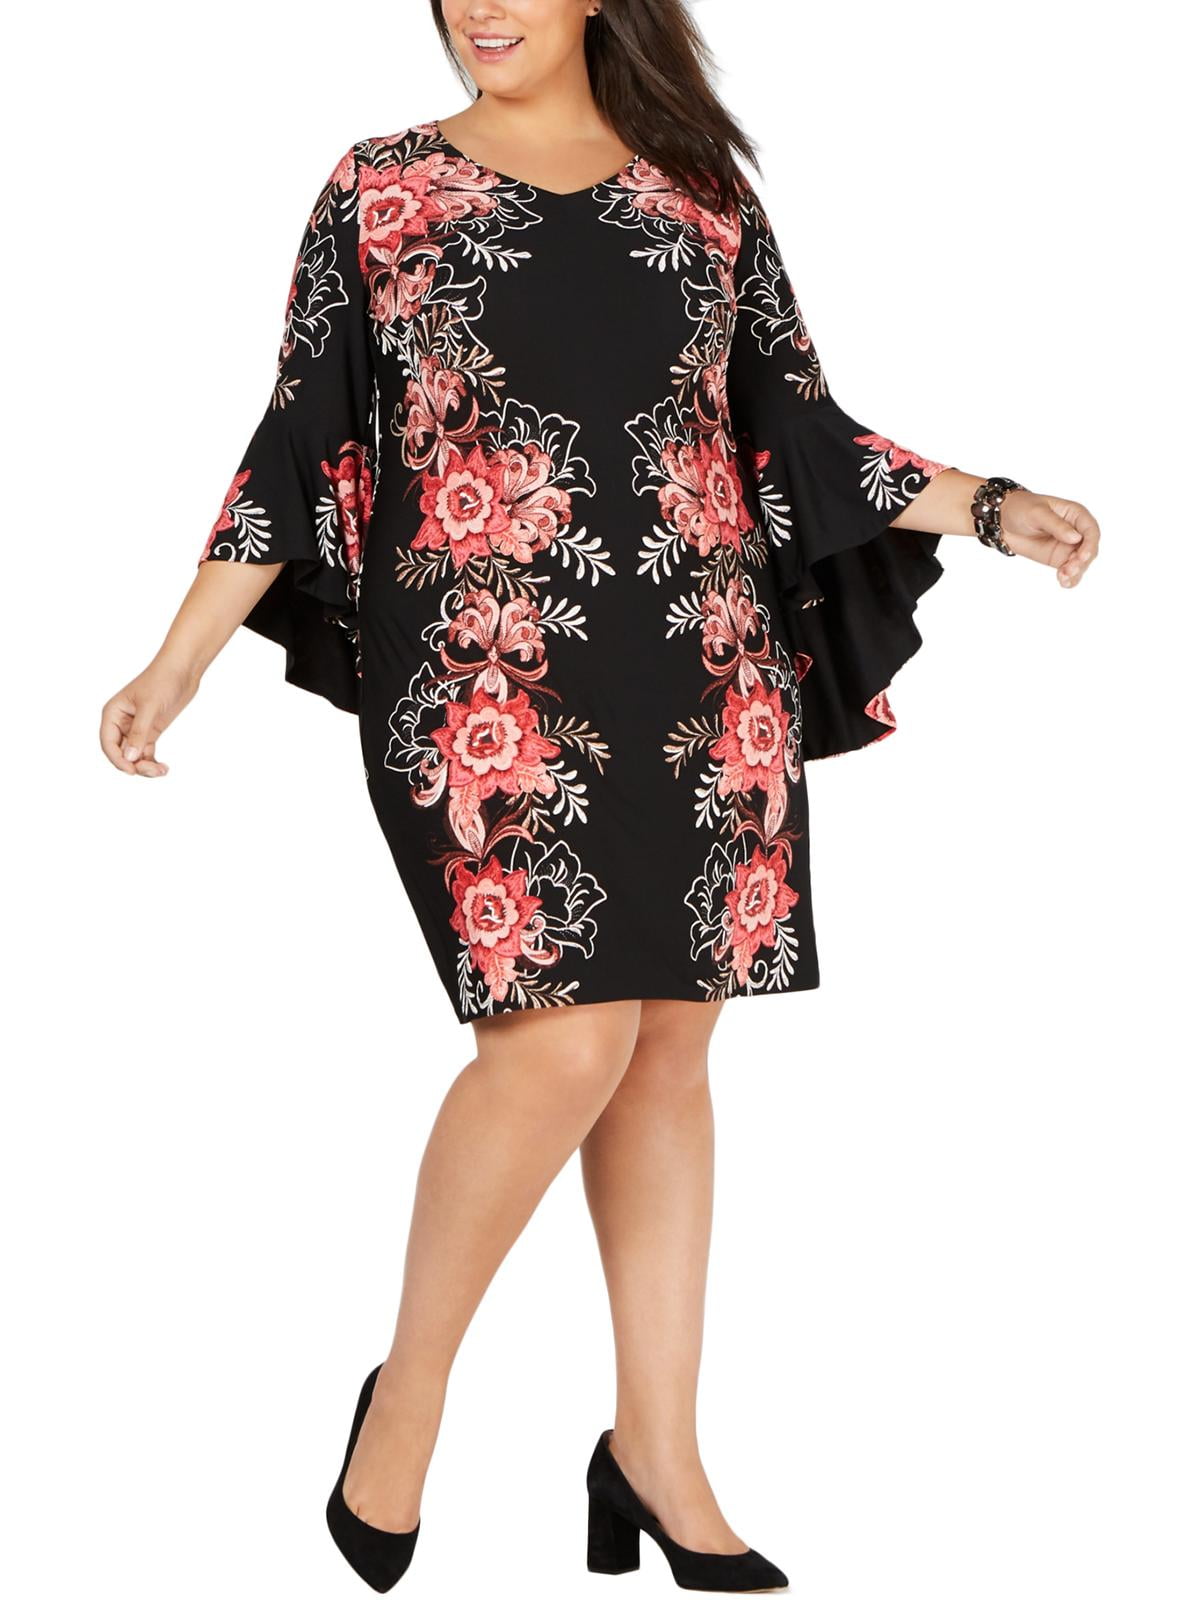 MSK - MSK Womens Plus Bell Sleeve Floral Cocktail Dress - Walmart.com ...